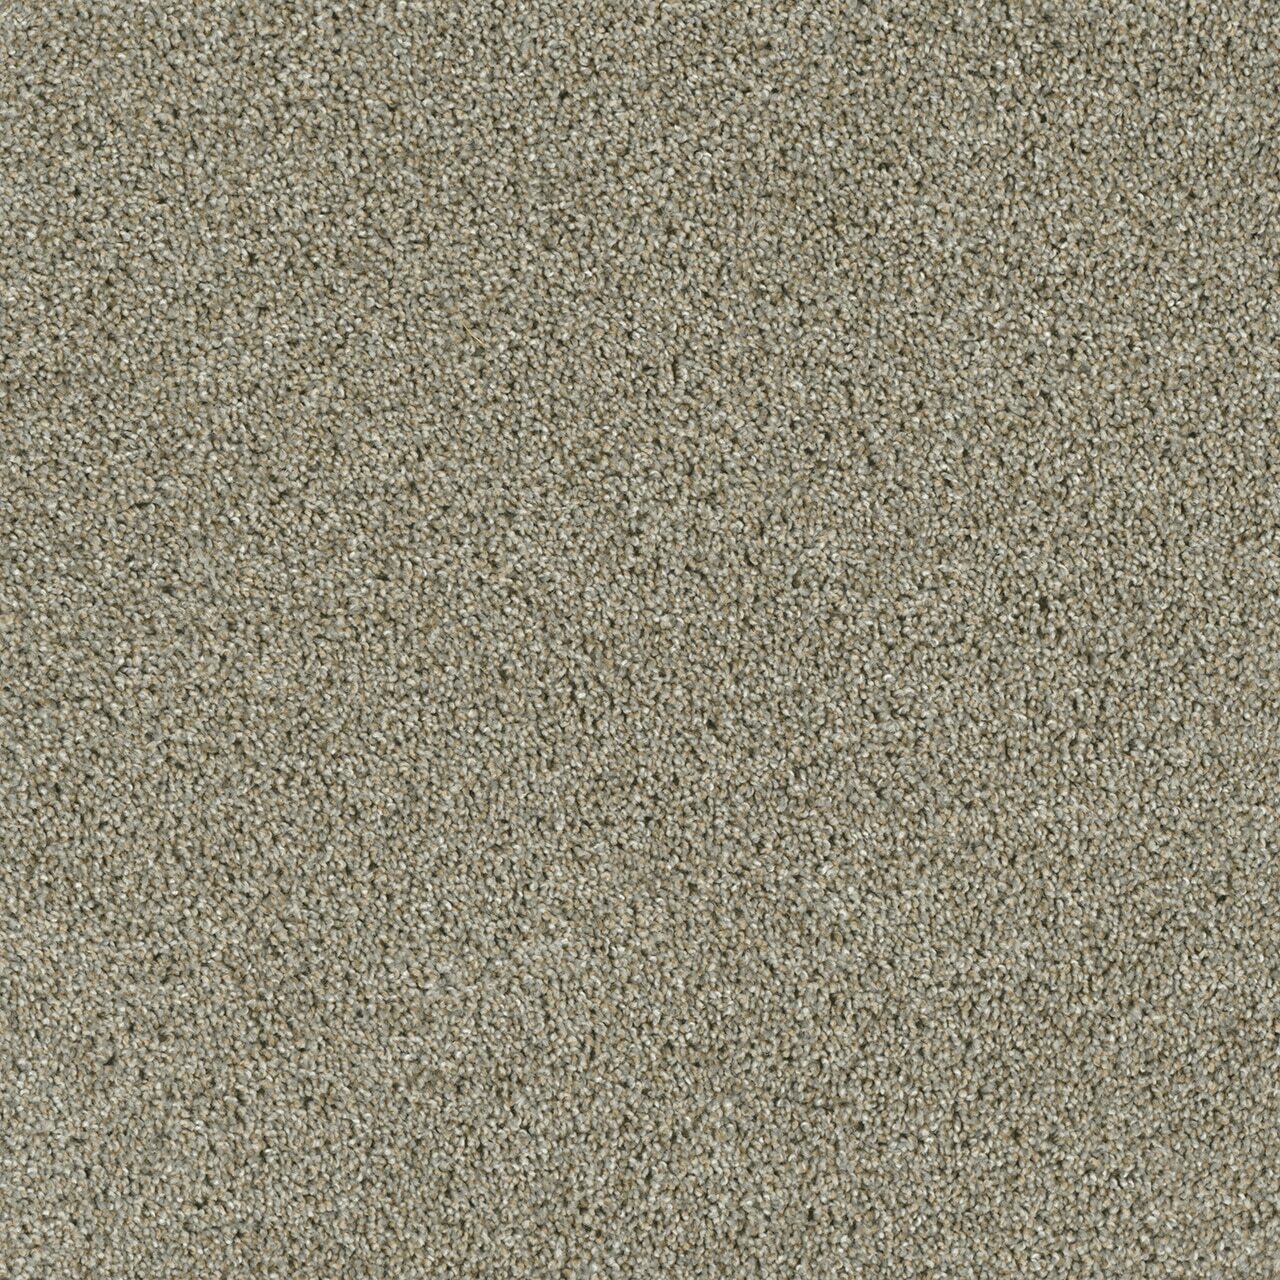 Rhinestone Carpet